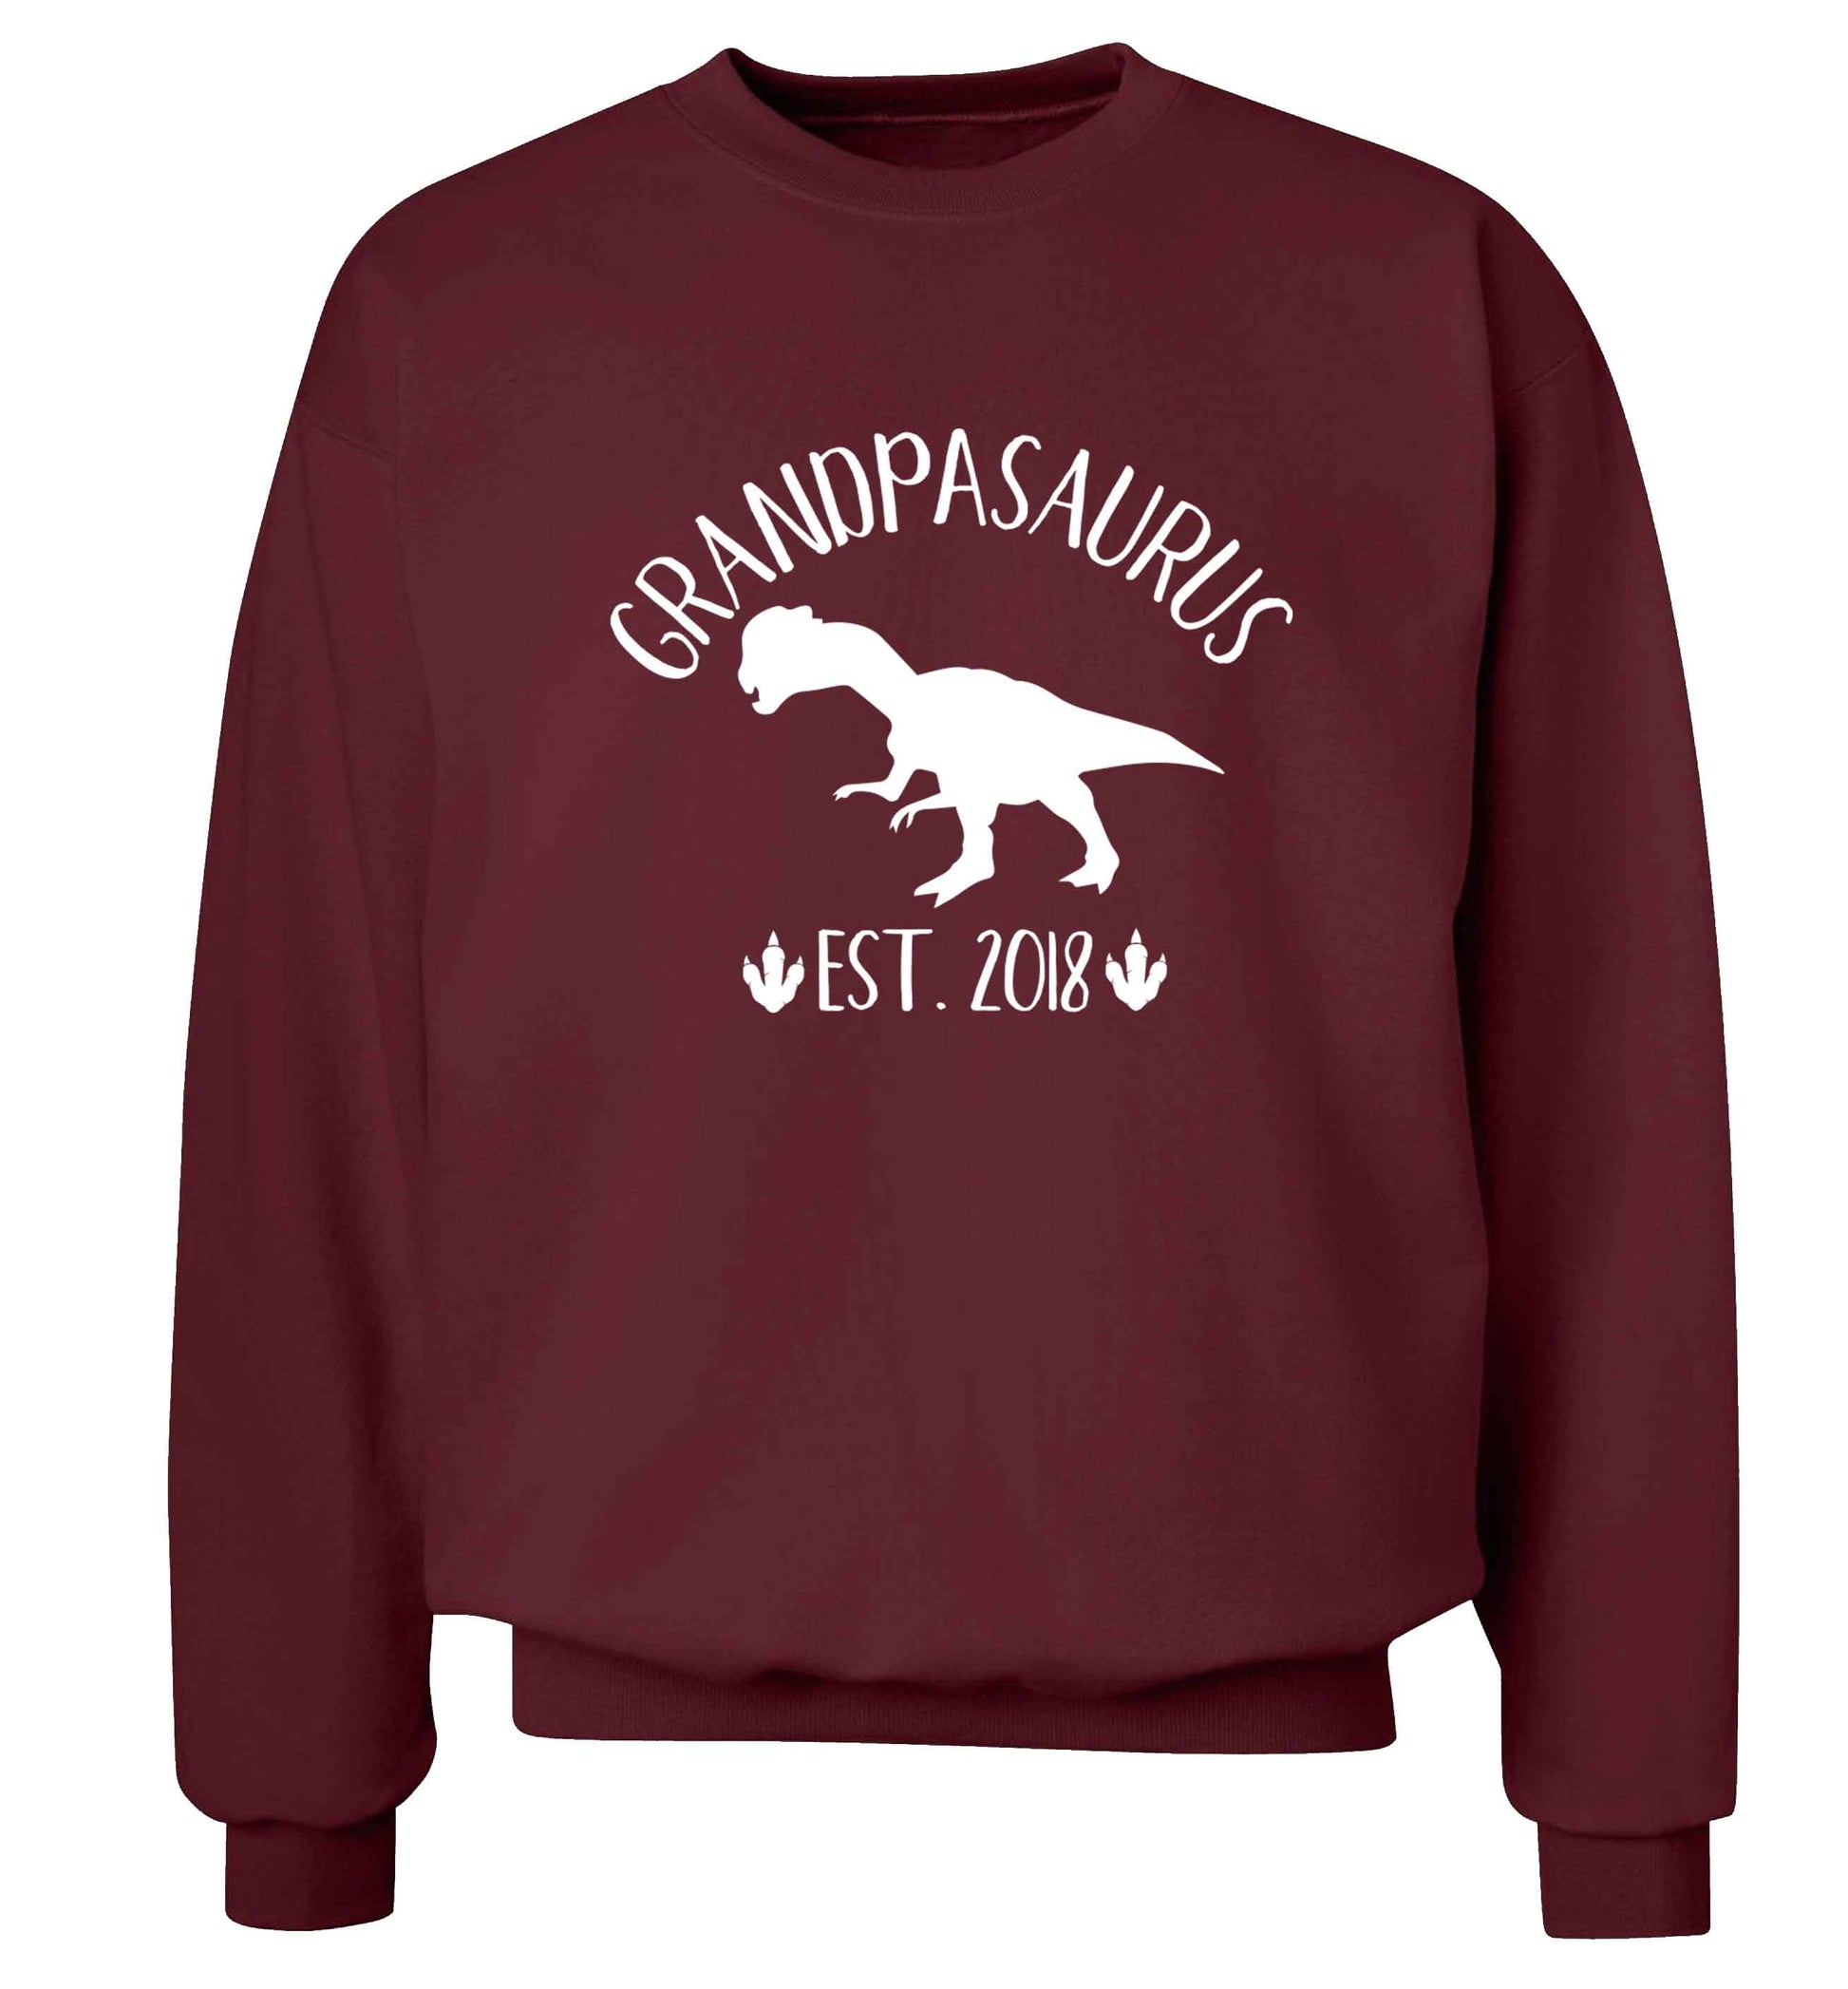 Personalised grandpasaurus since (custom date) Adult's unisex maroon Sweater 2XL